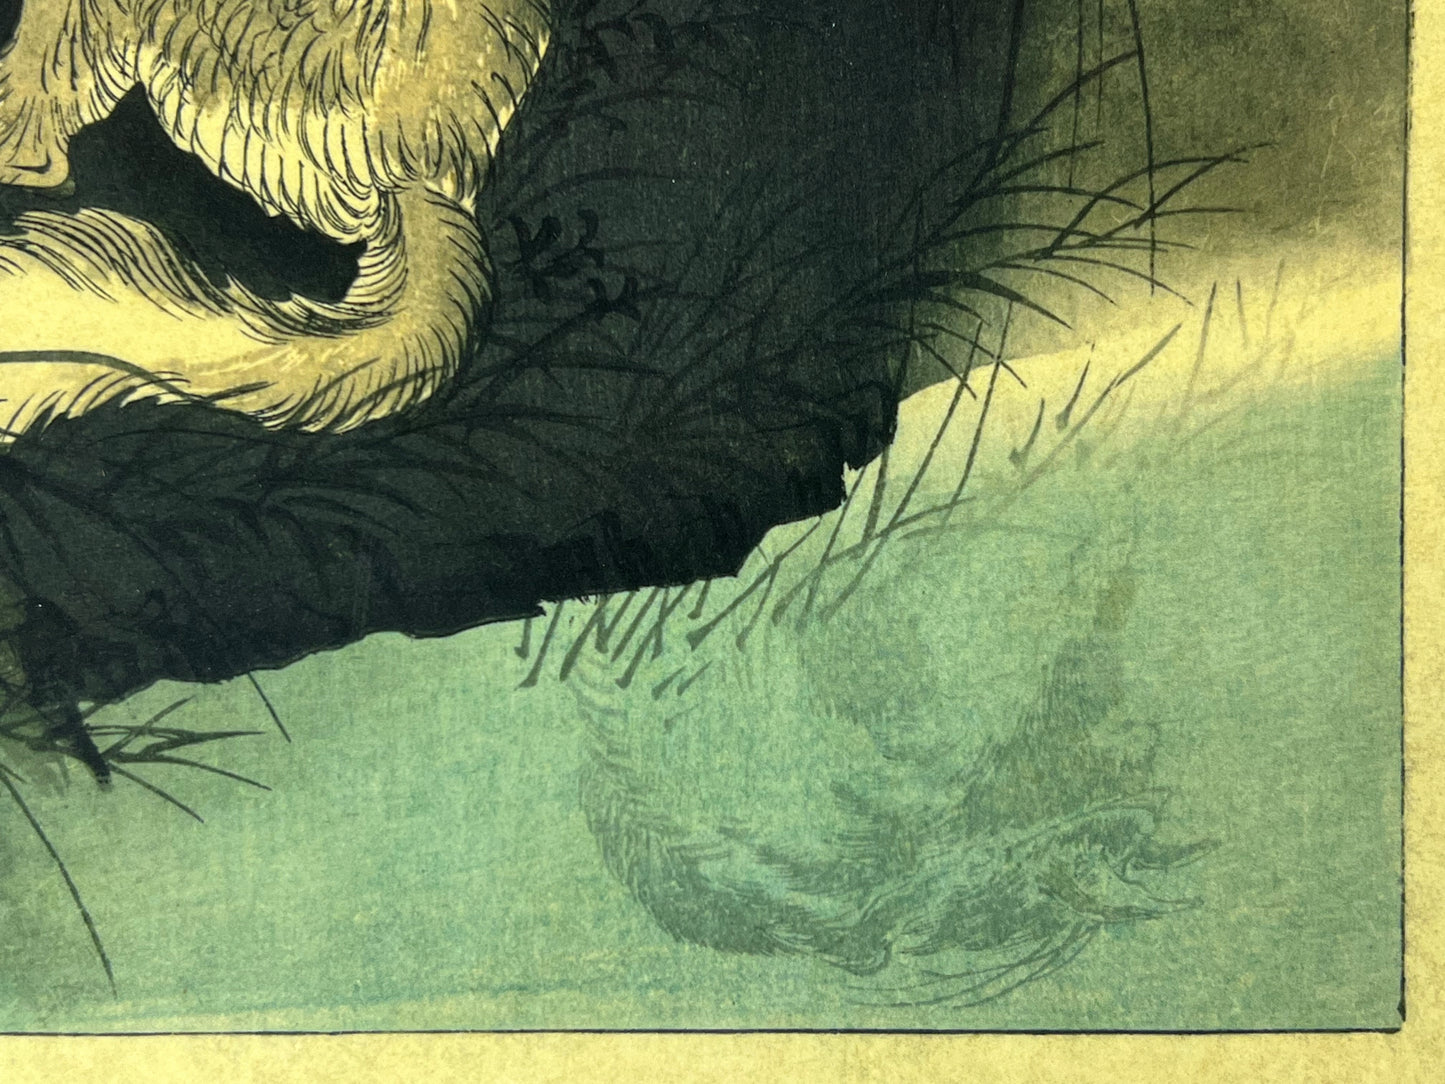 Yoshitoshi Giclee Woodblock Print "Musashi Plain Moon" 100 Views of the Moon 9.5"x14"